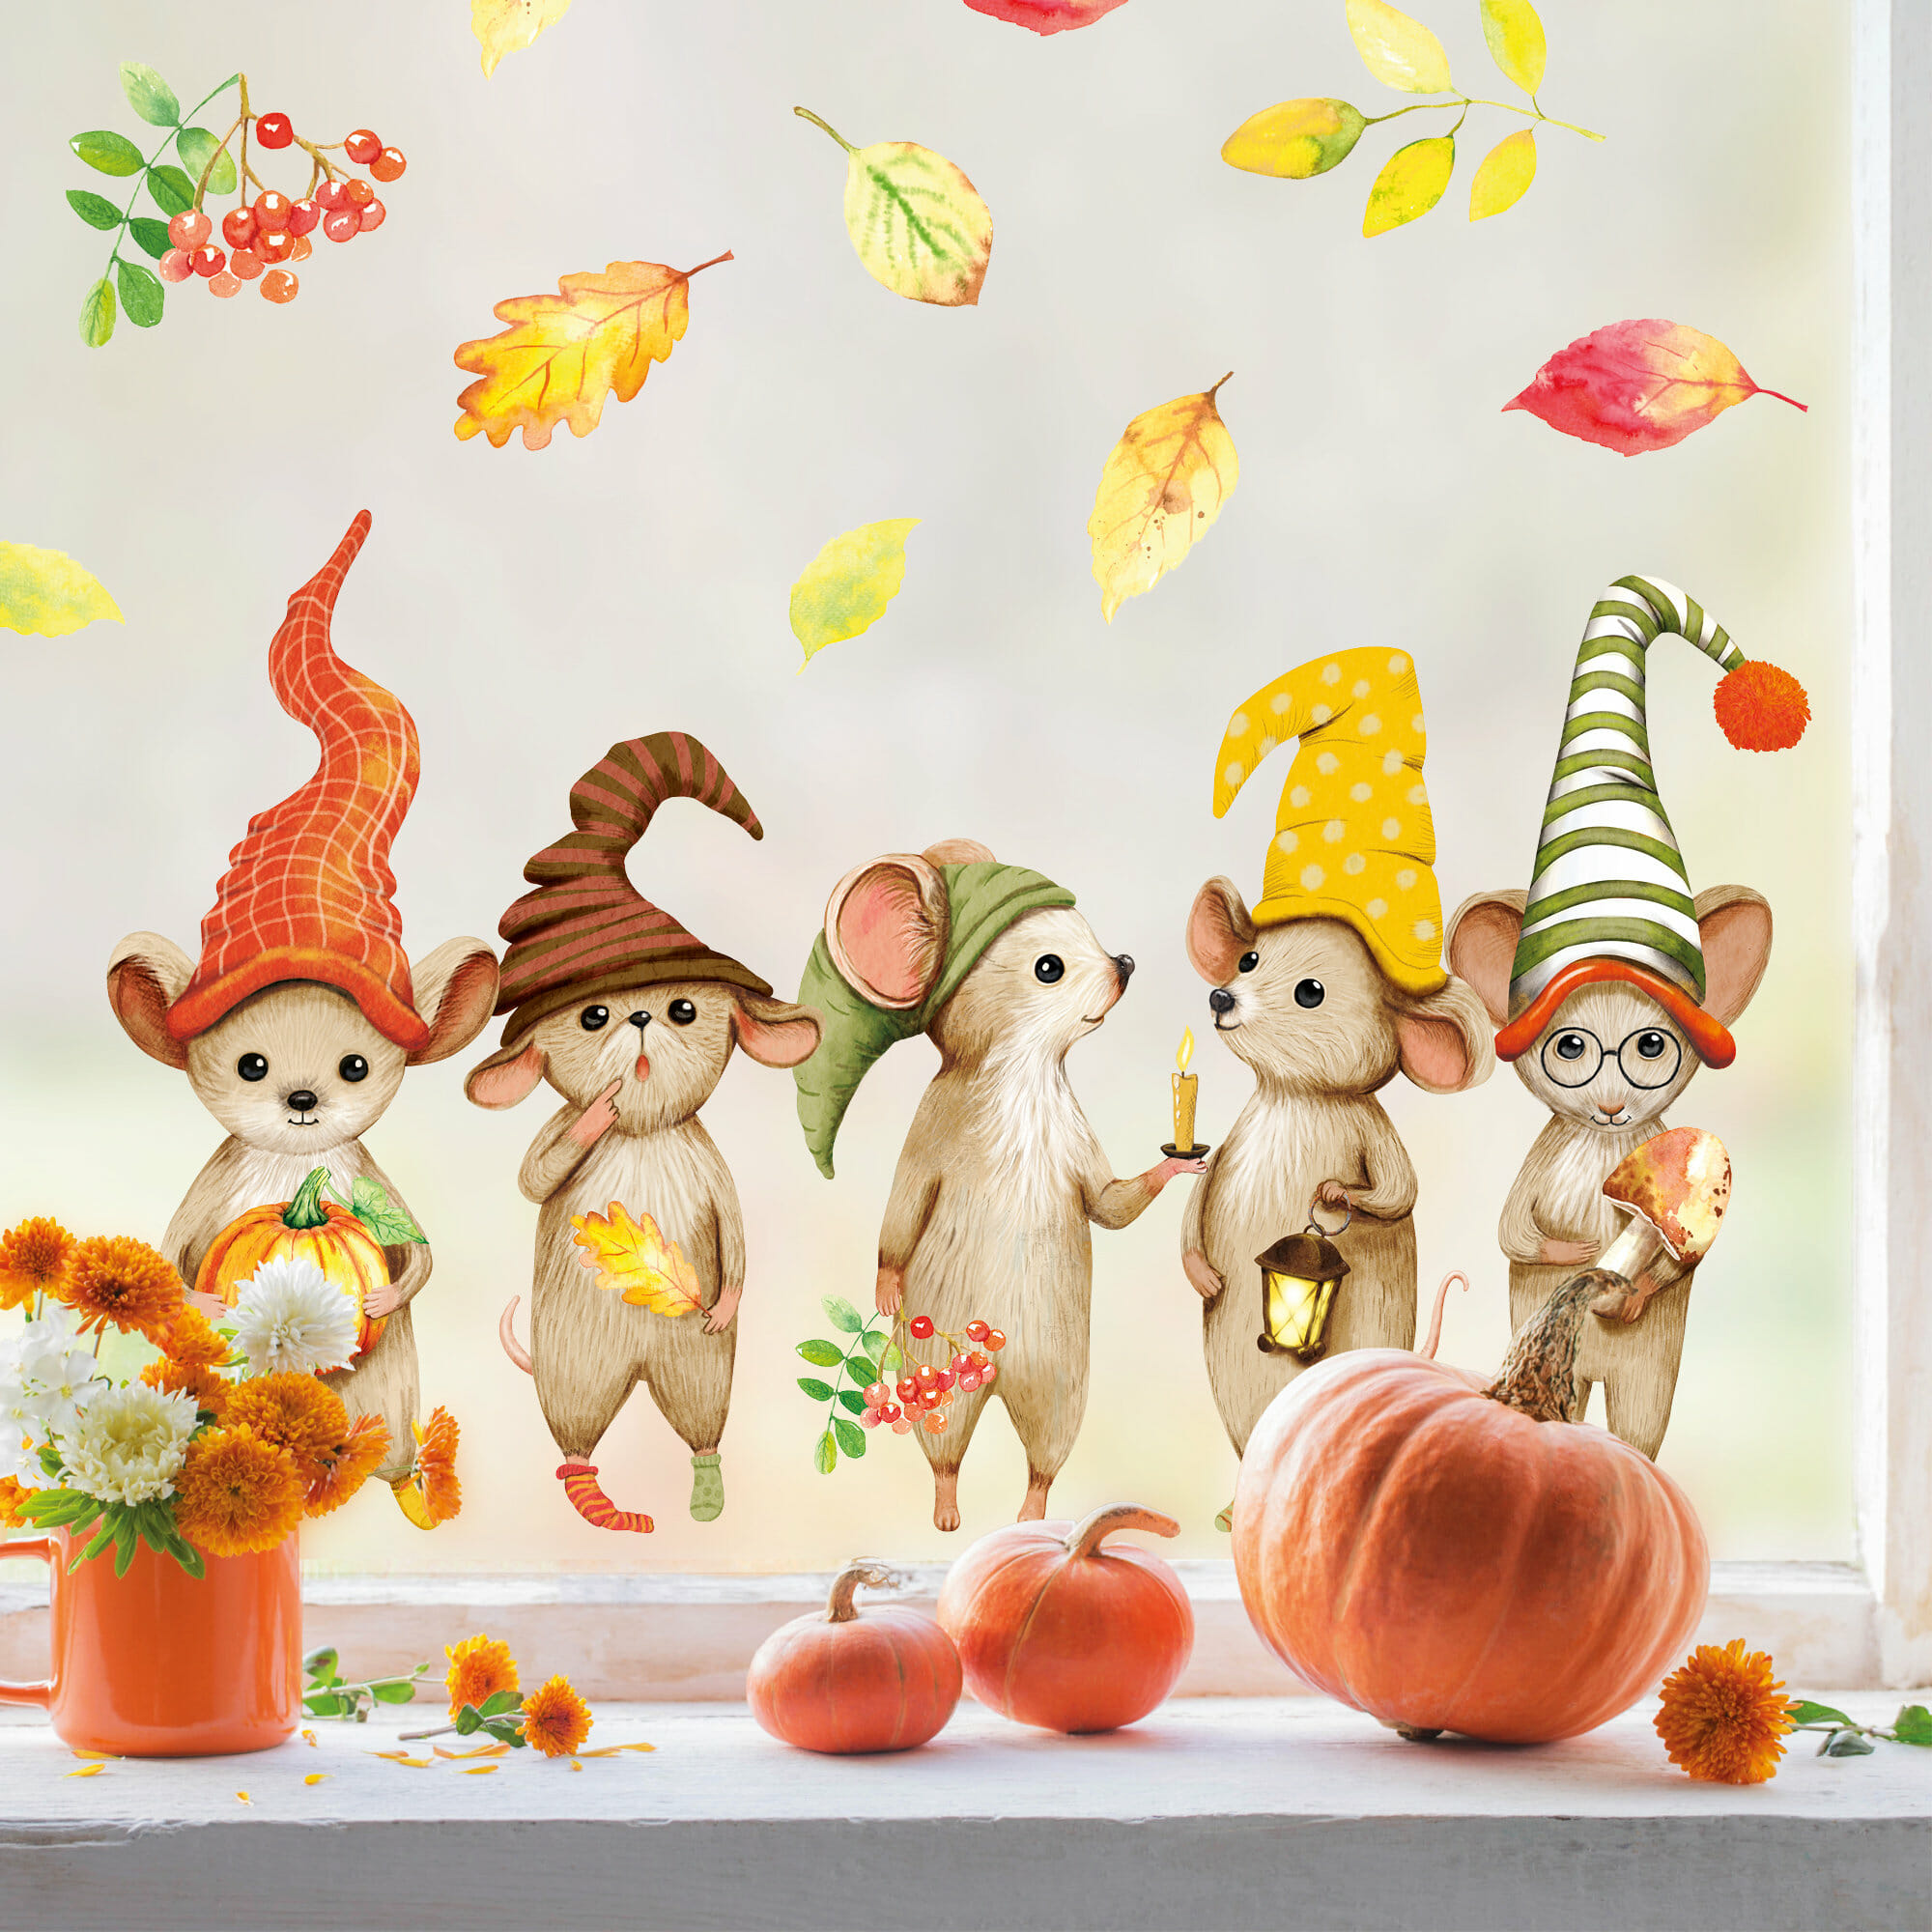 Fensteraufkleber Herbst Mäuse mit Blättern und Kürbis, herbstlicher Fensteraufkleber Fensterdeko